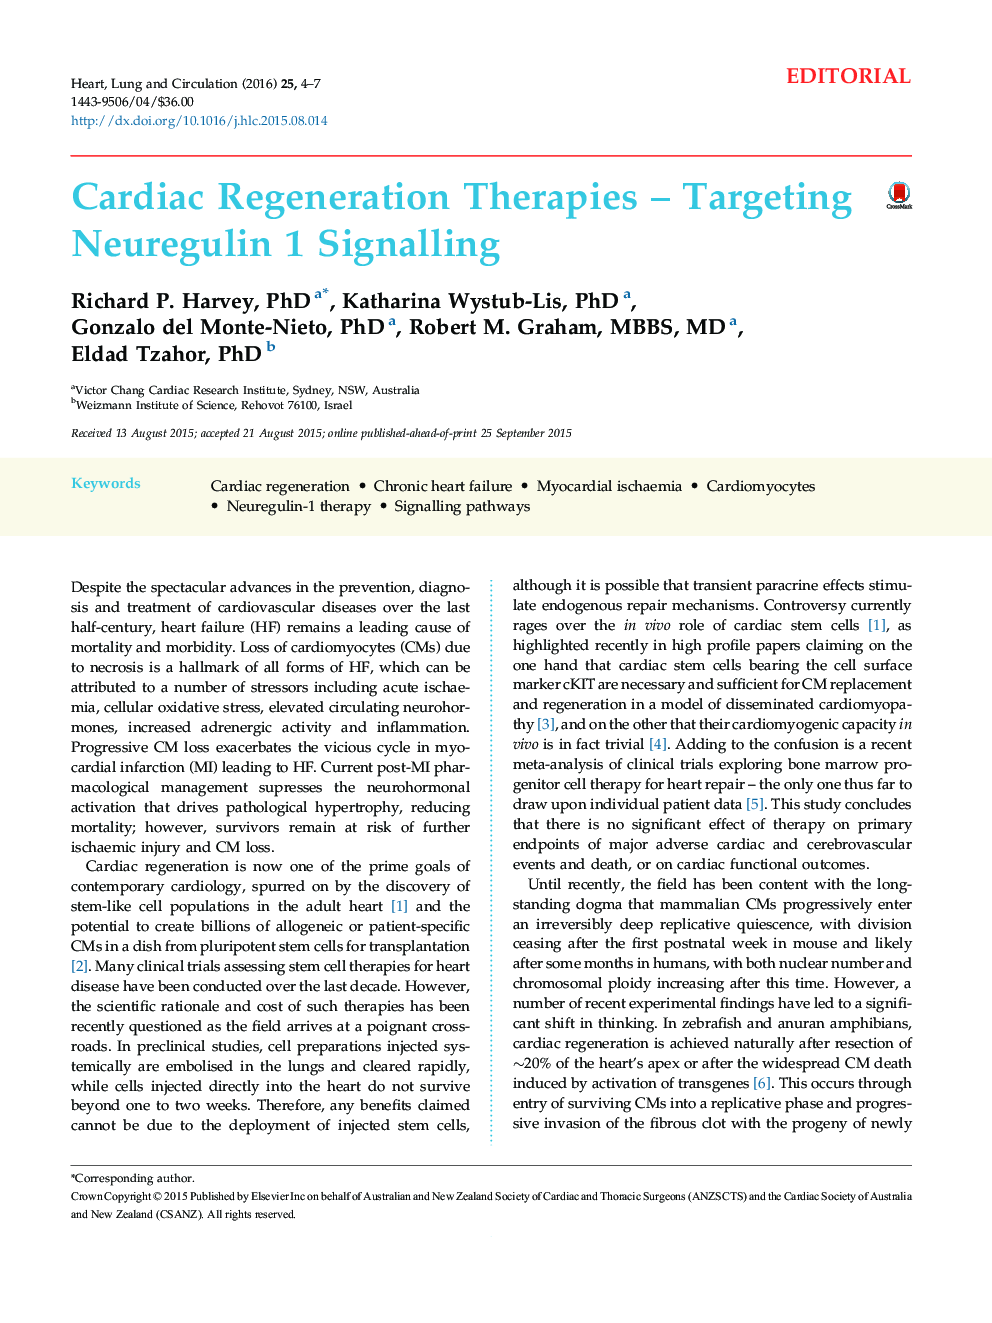 Cardiac Regeneration Therapies - Targeting Neuregulin 1 Signalling